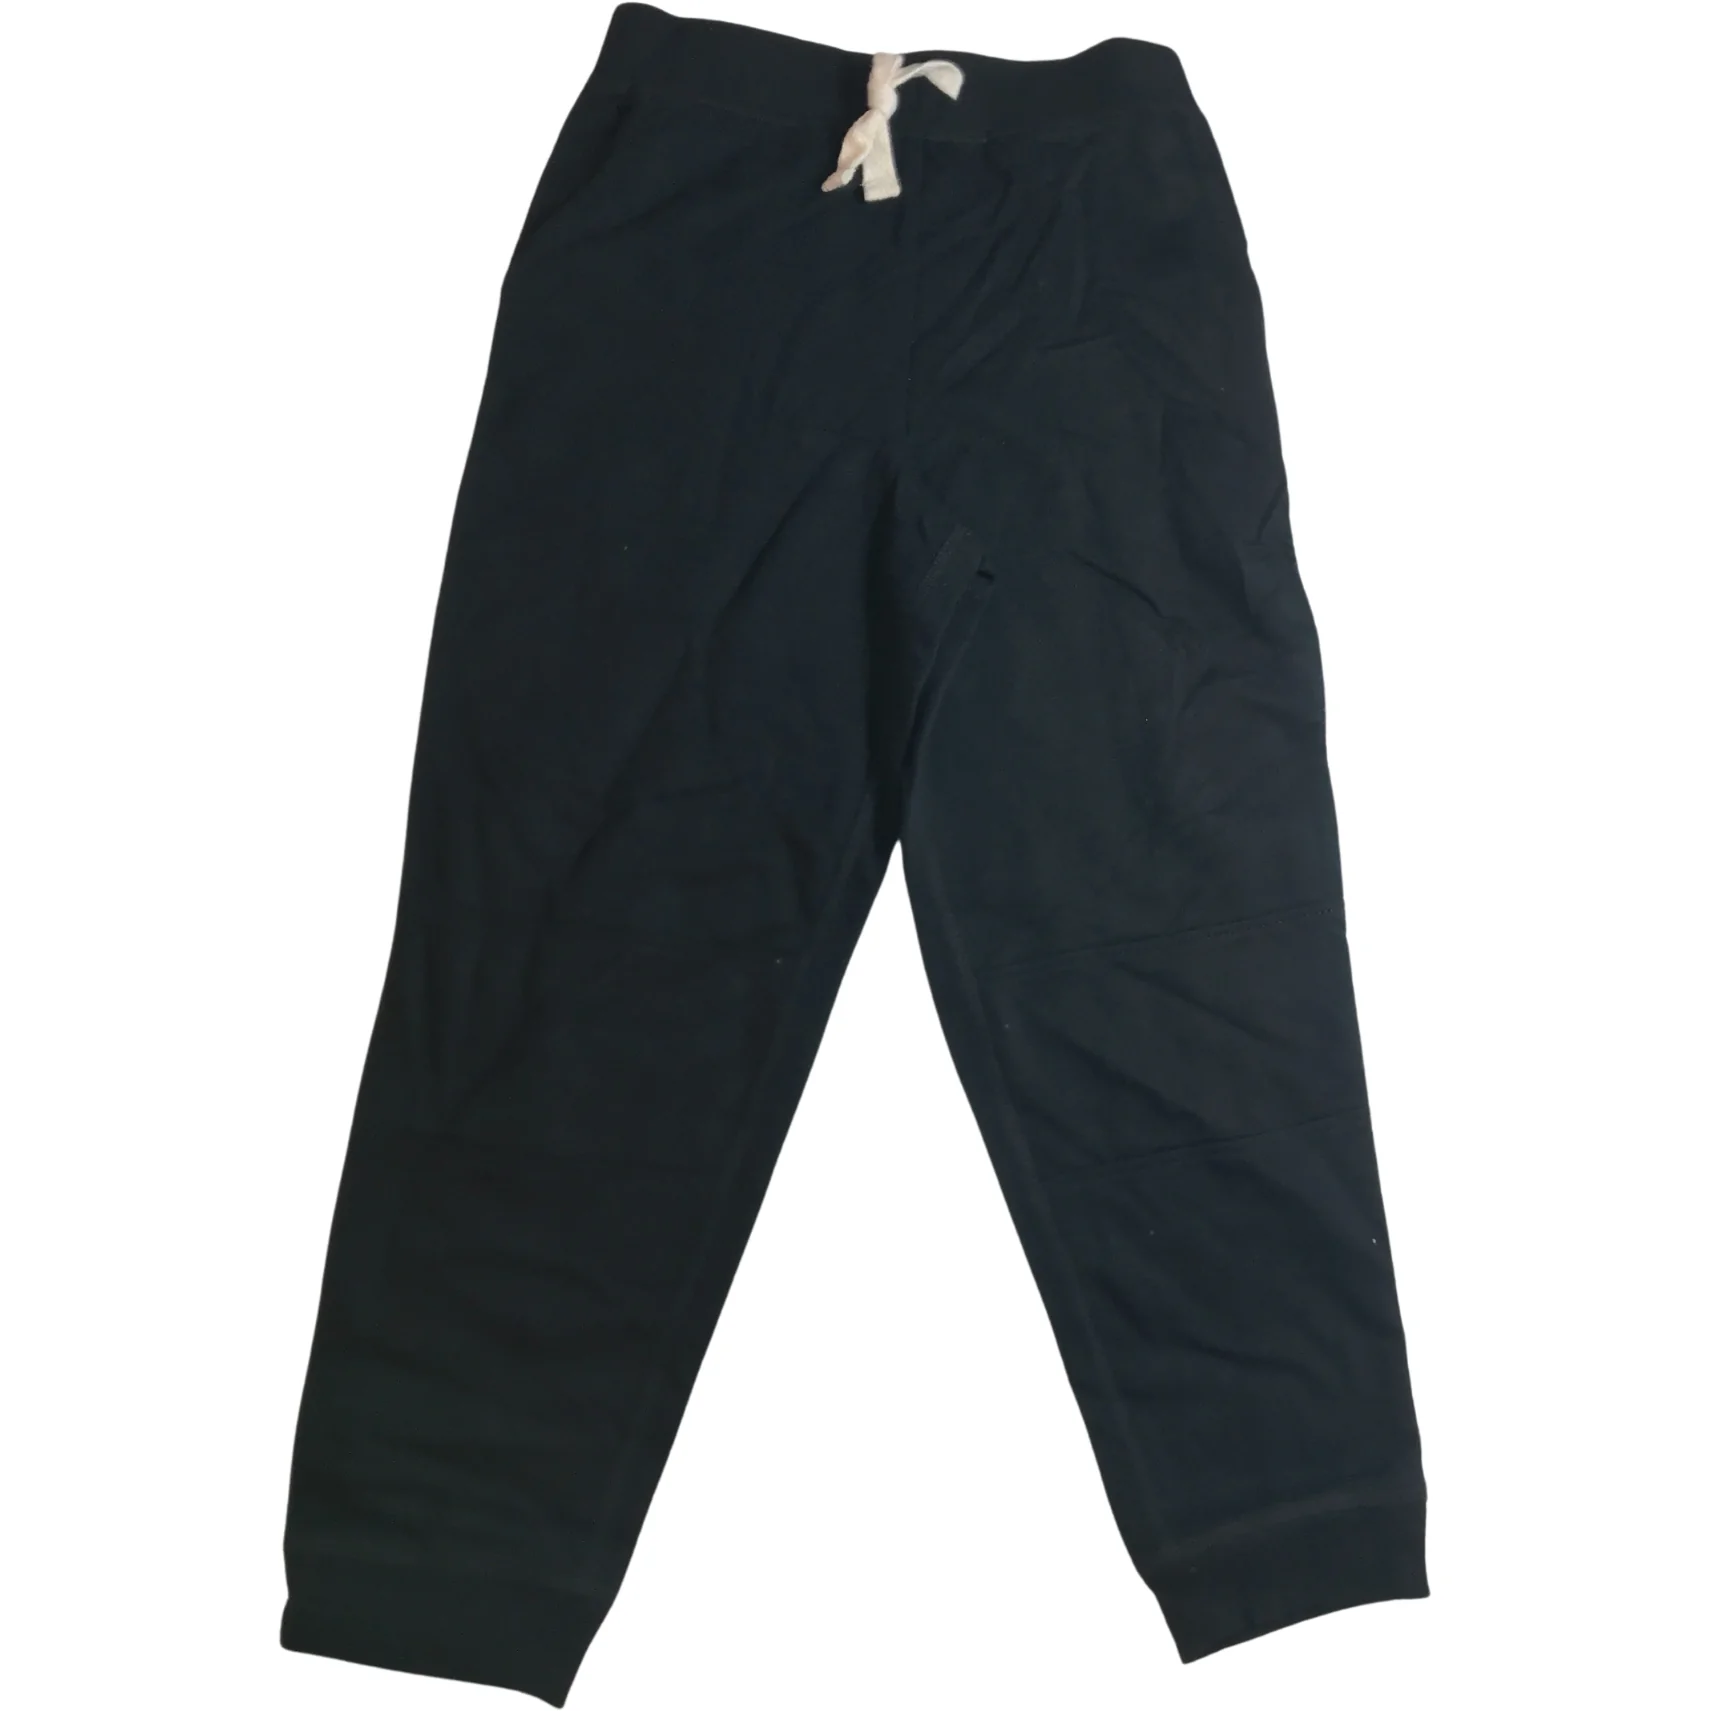 Epic Threads Boy's Joggers: Boy's Jogging Pants / Black / Large (7/7X)